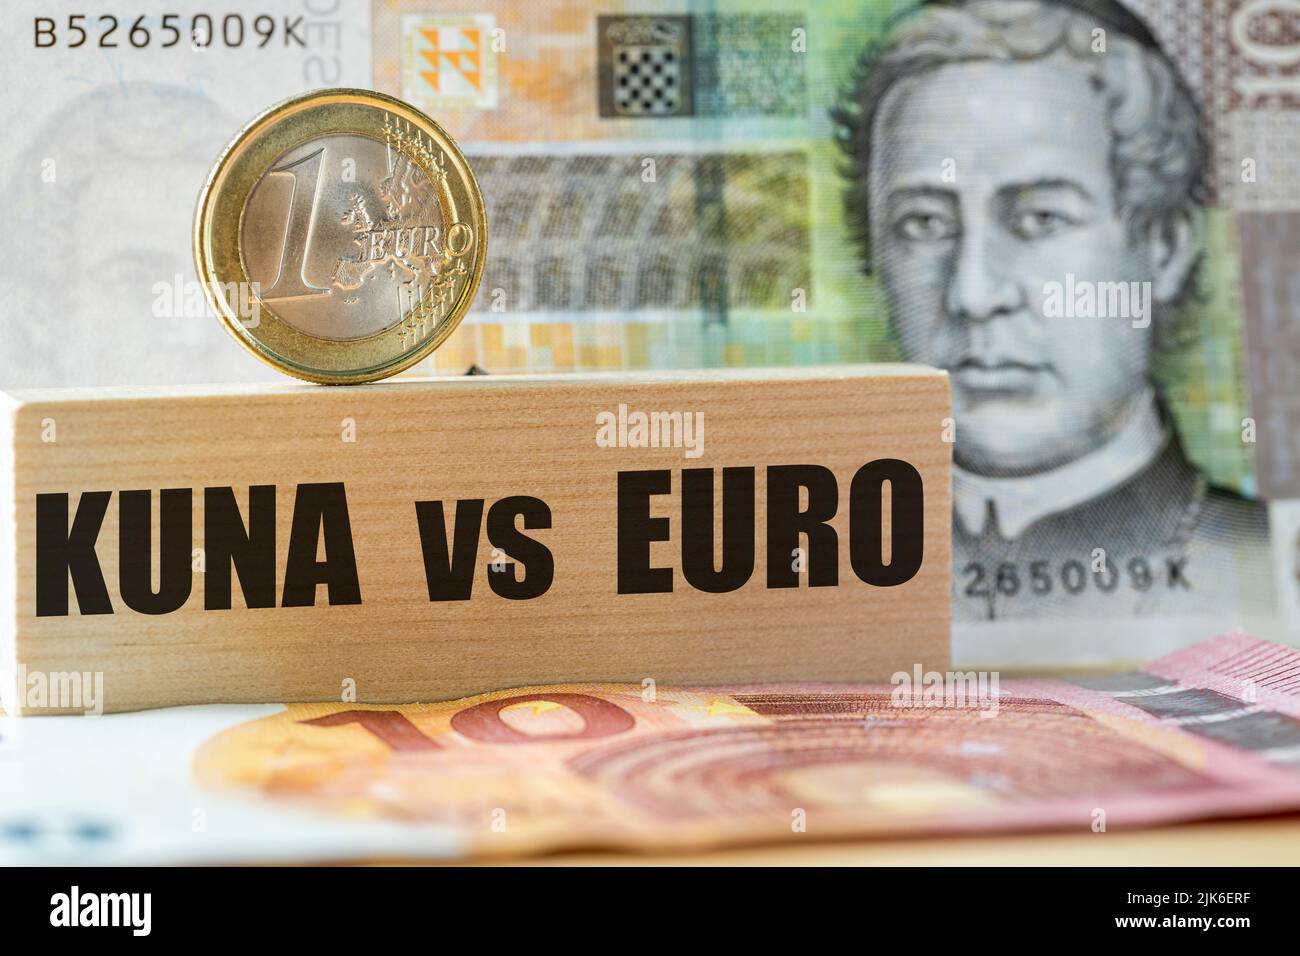 10 kuna banknote, 1 euro coin on a wooden block, written Kuna vs Euro, Concept, Croatian currency exchange into euro, Croatia's entry into the Euro zo Stock Photo